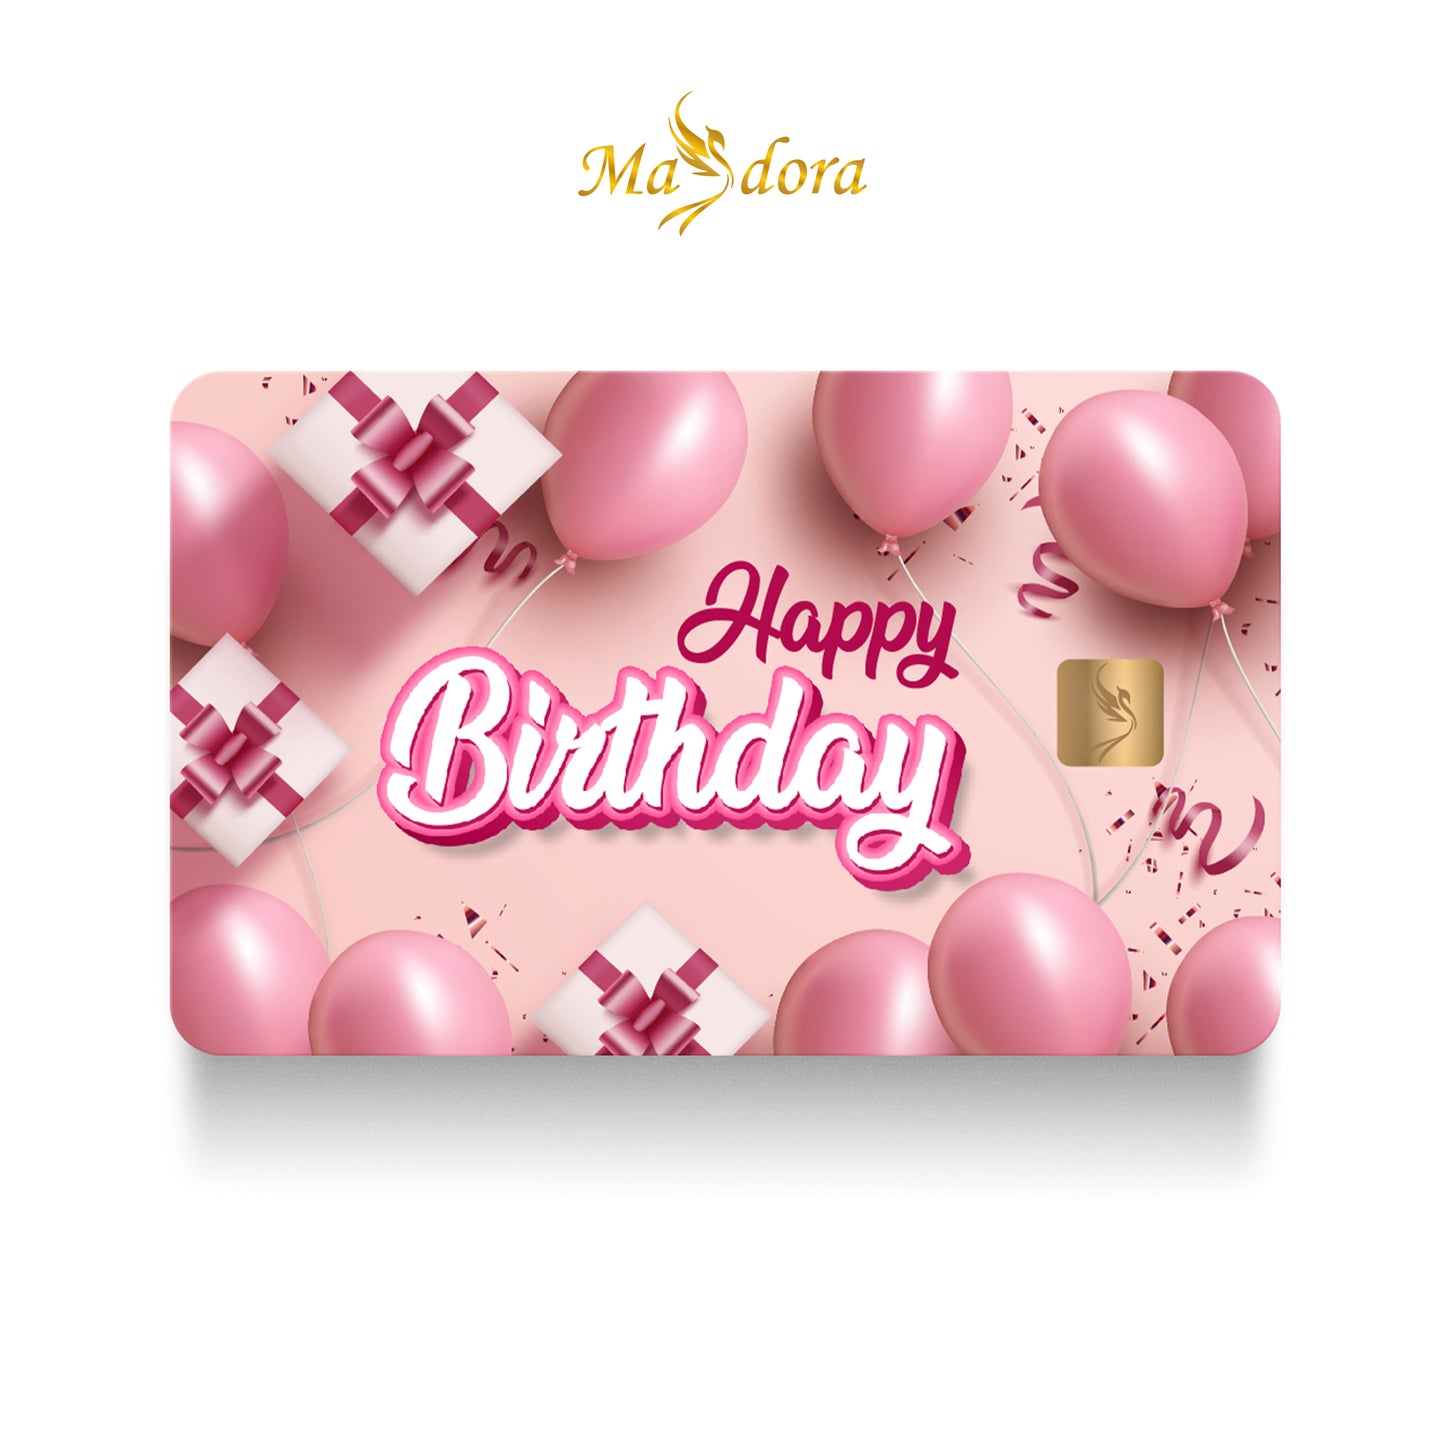 Masdora 999.9 Gold Bar 0.25g Gift Series ~ Happy Birthday